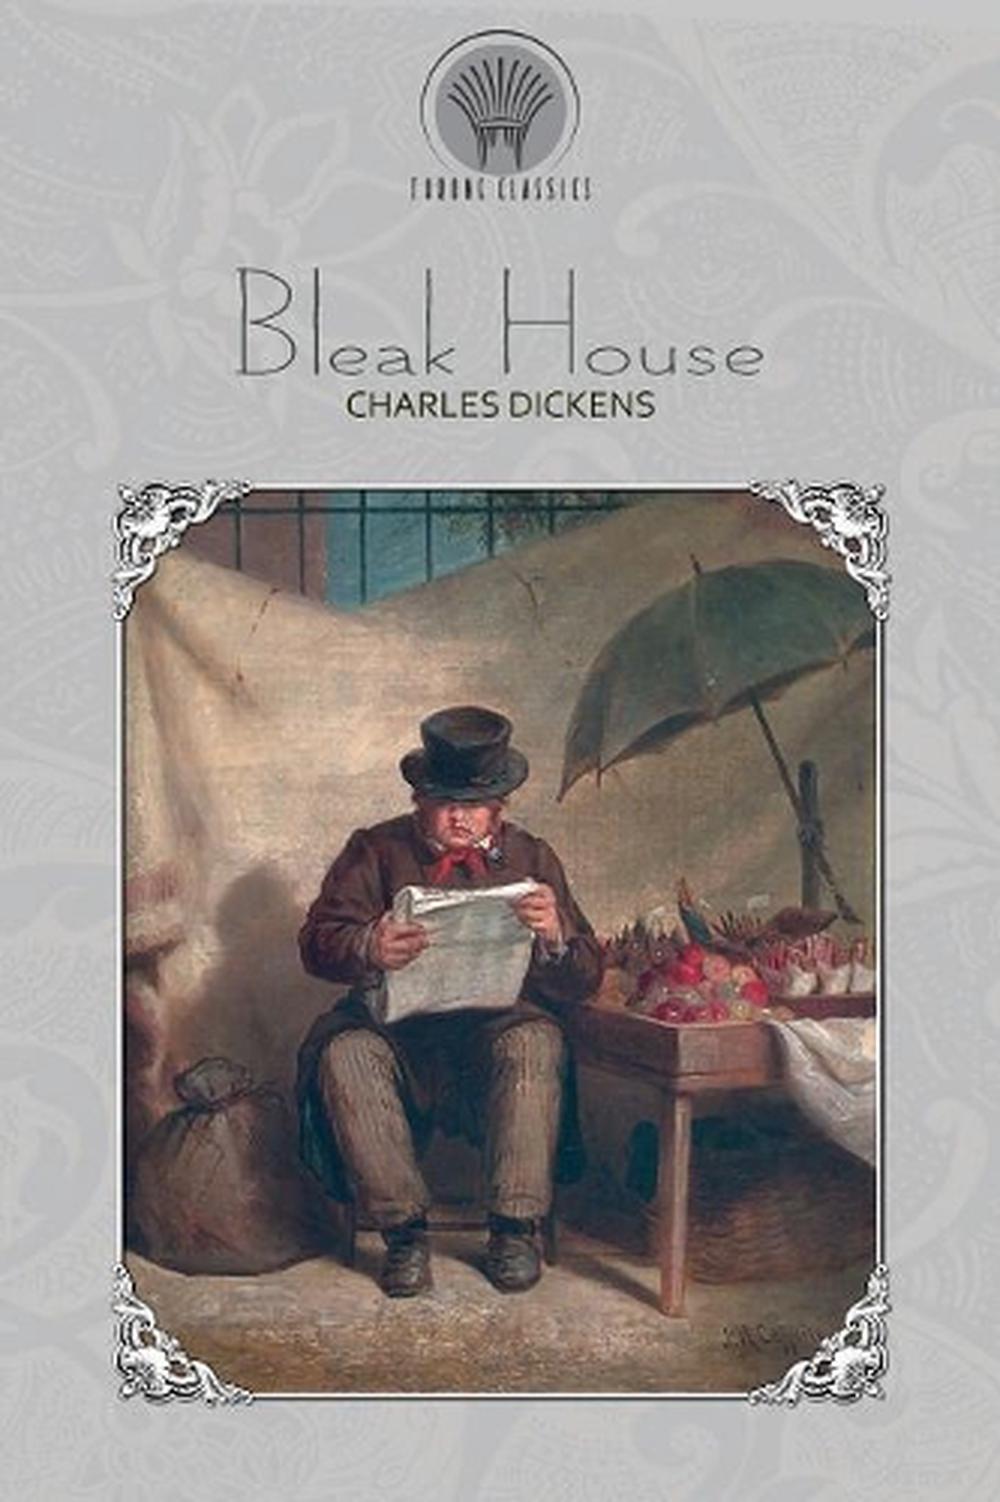 bleak house book